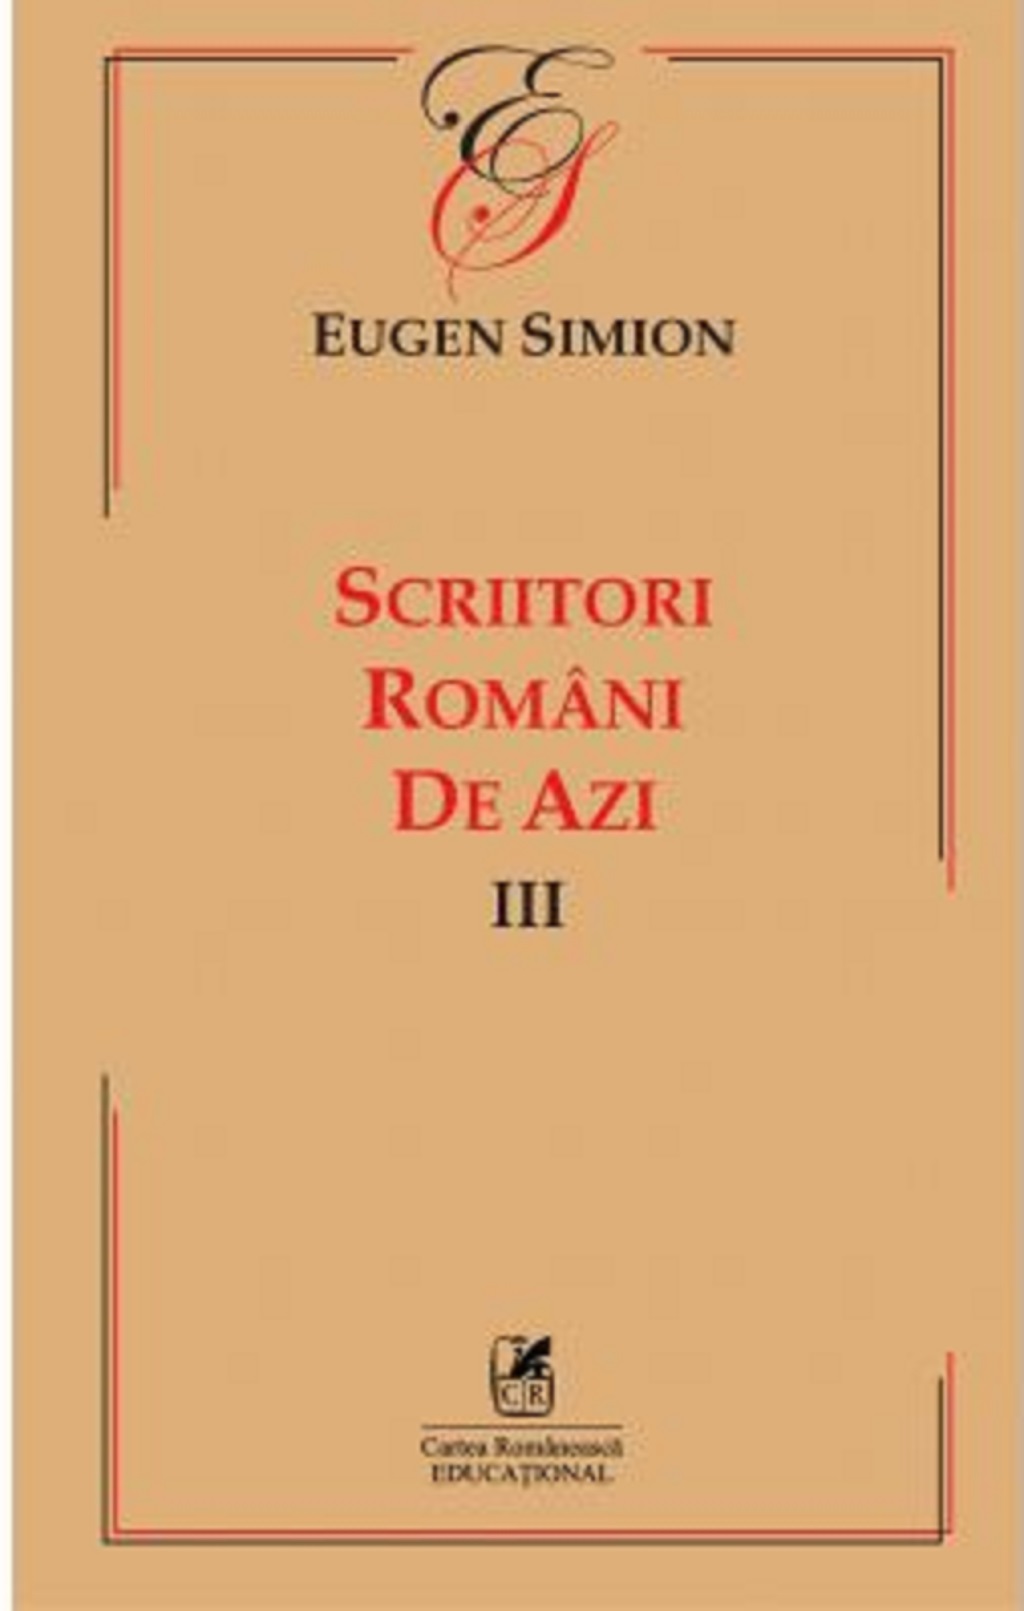 Scriitori romani de azi III | Eugen Simion azi